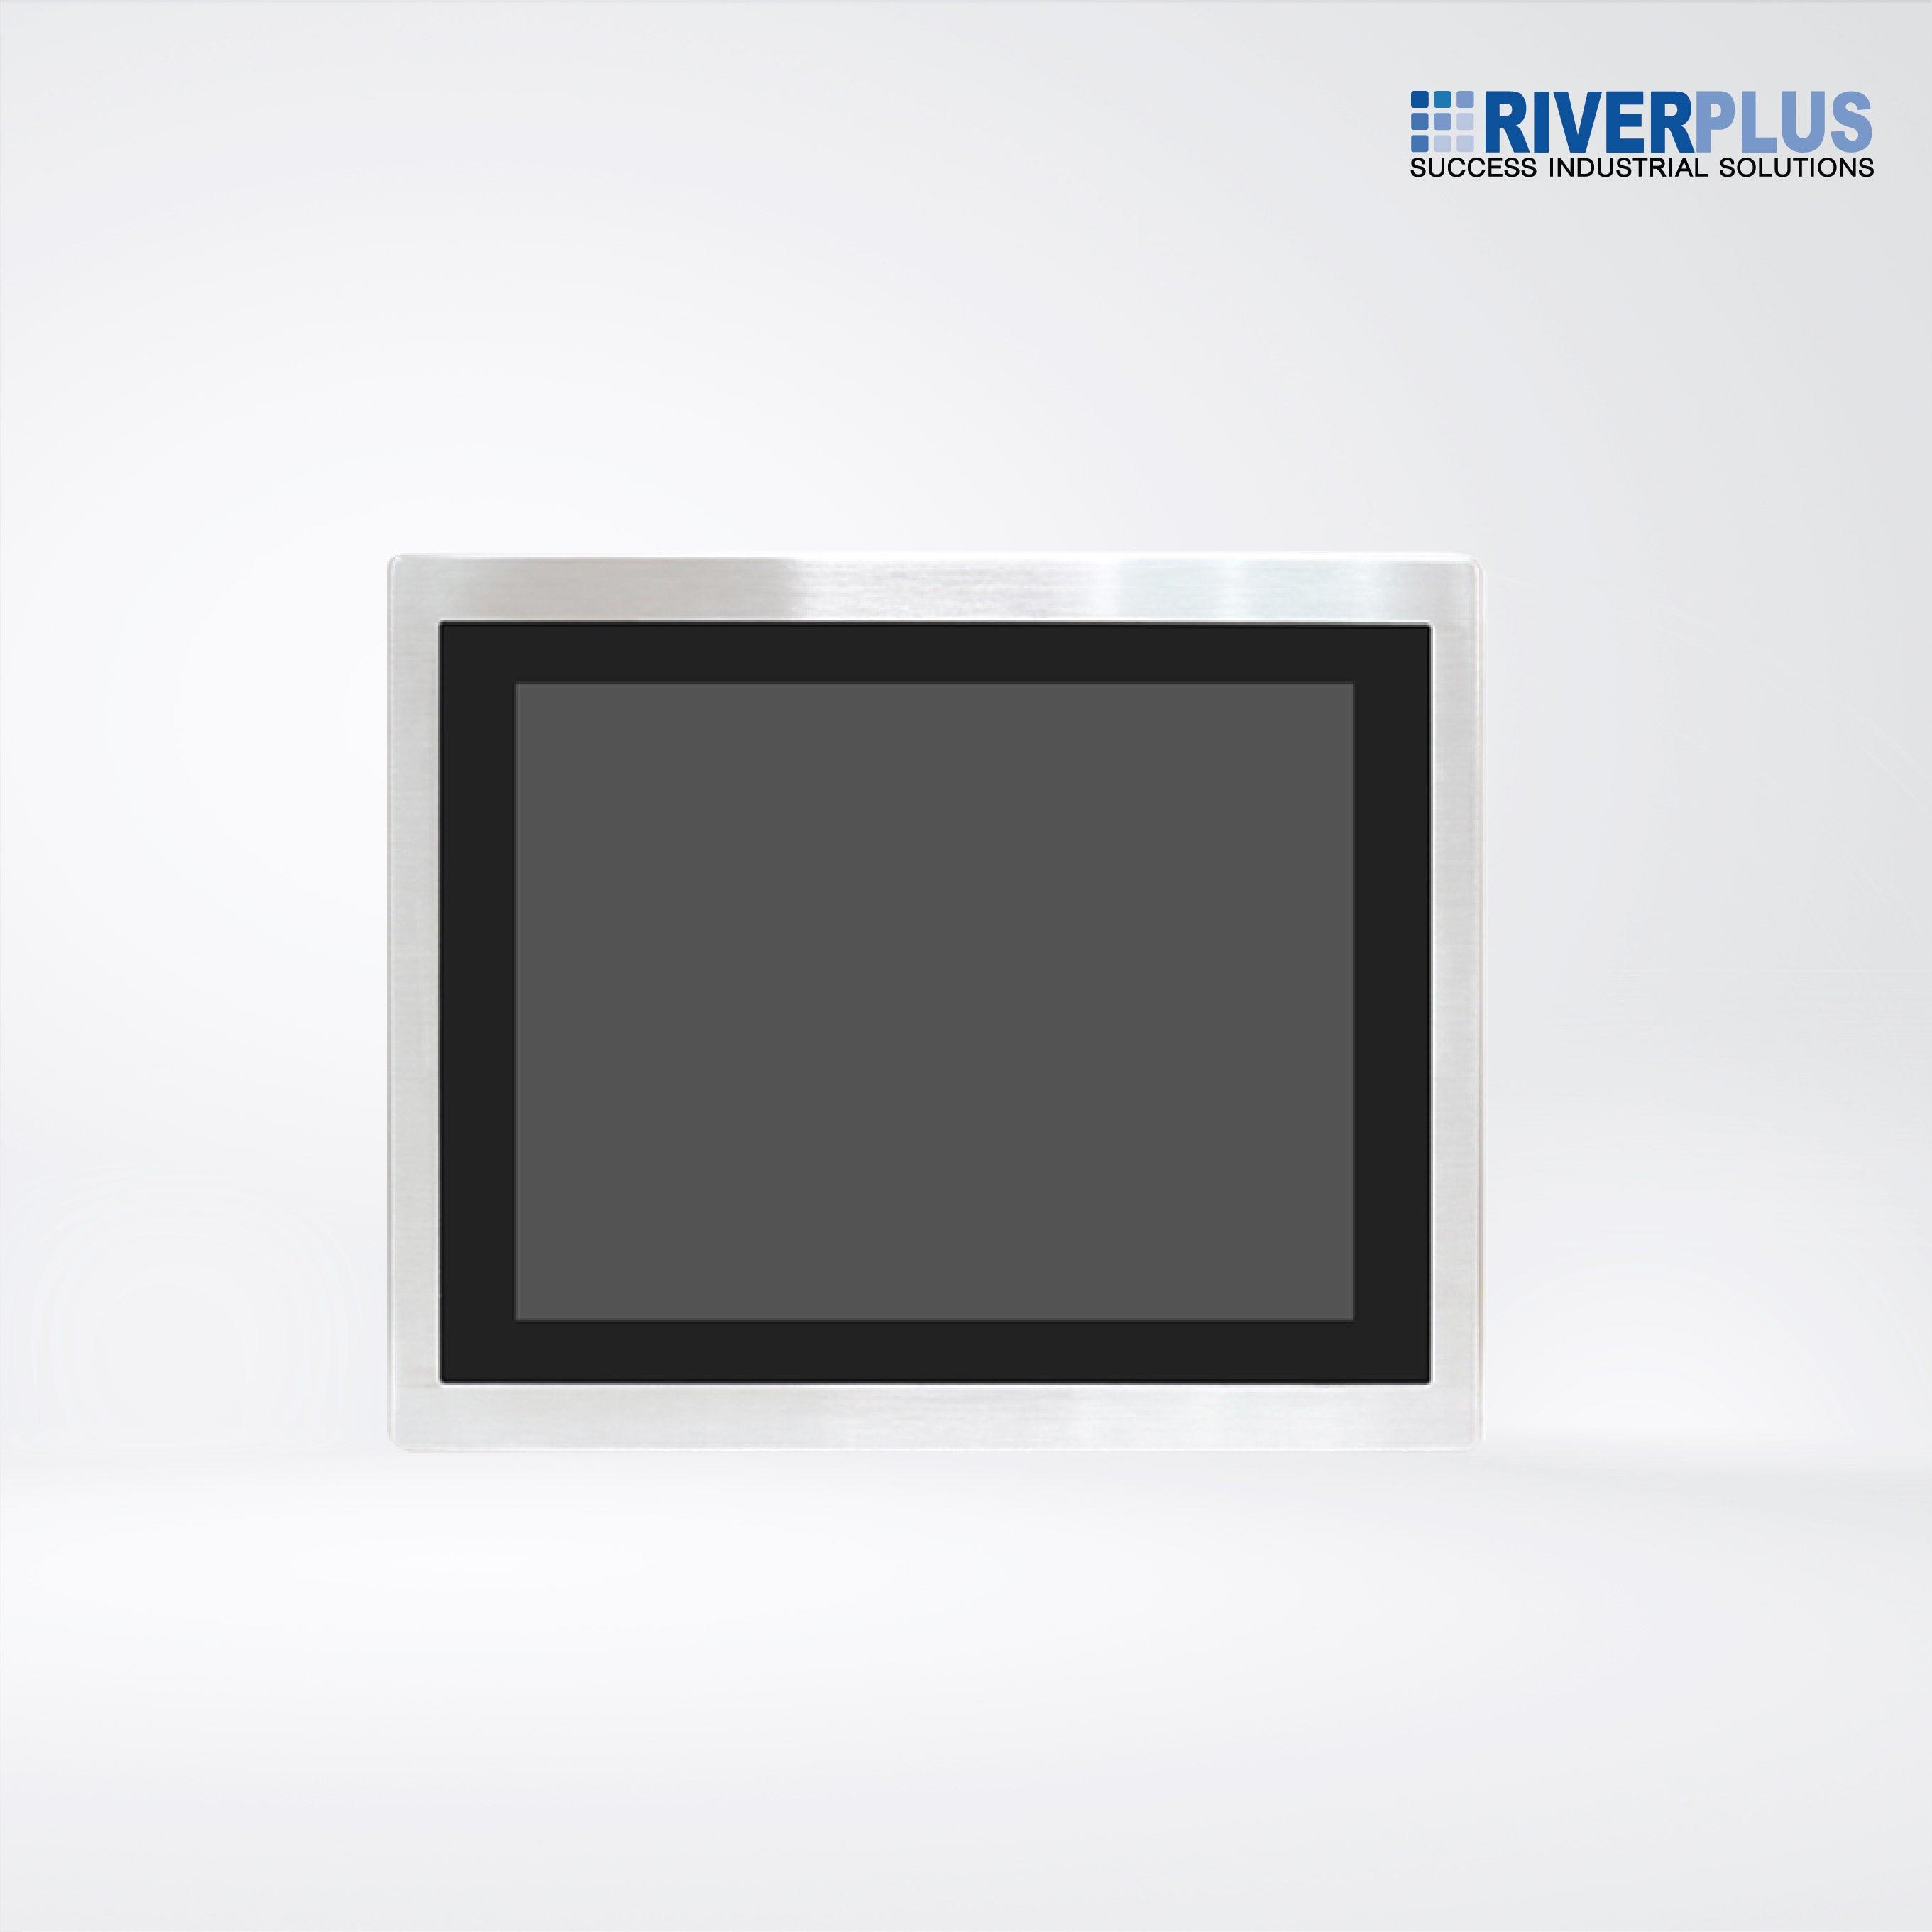 AEx-915APH 15” Intel Skylake IP66 Stainless Steel Panel PC, Luminance : 1,000 (cd/m²) - Riverplus